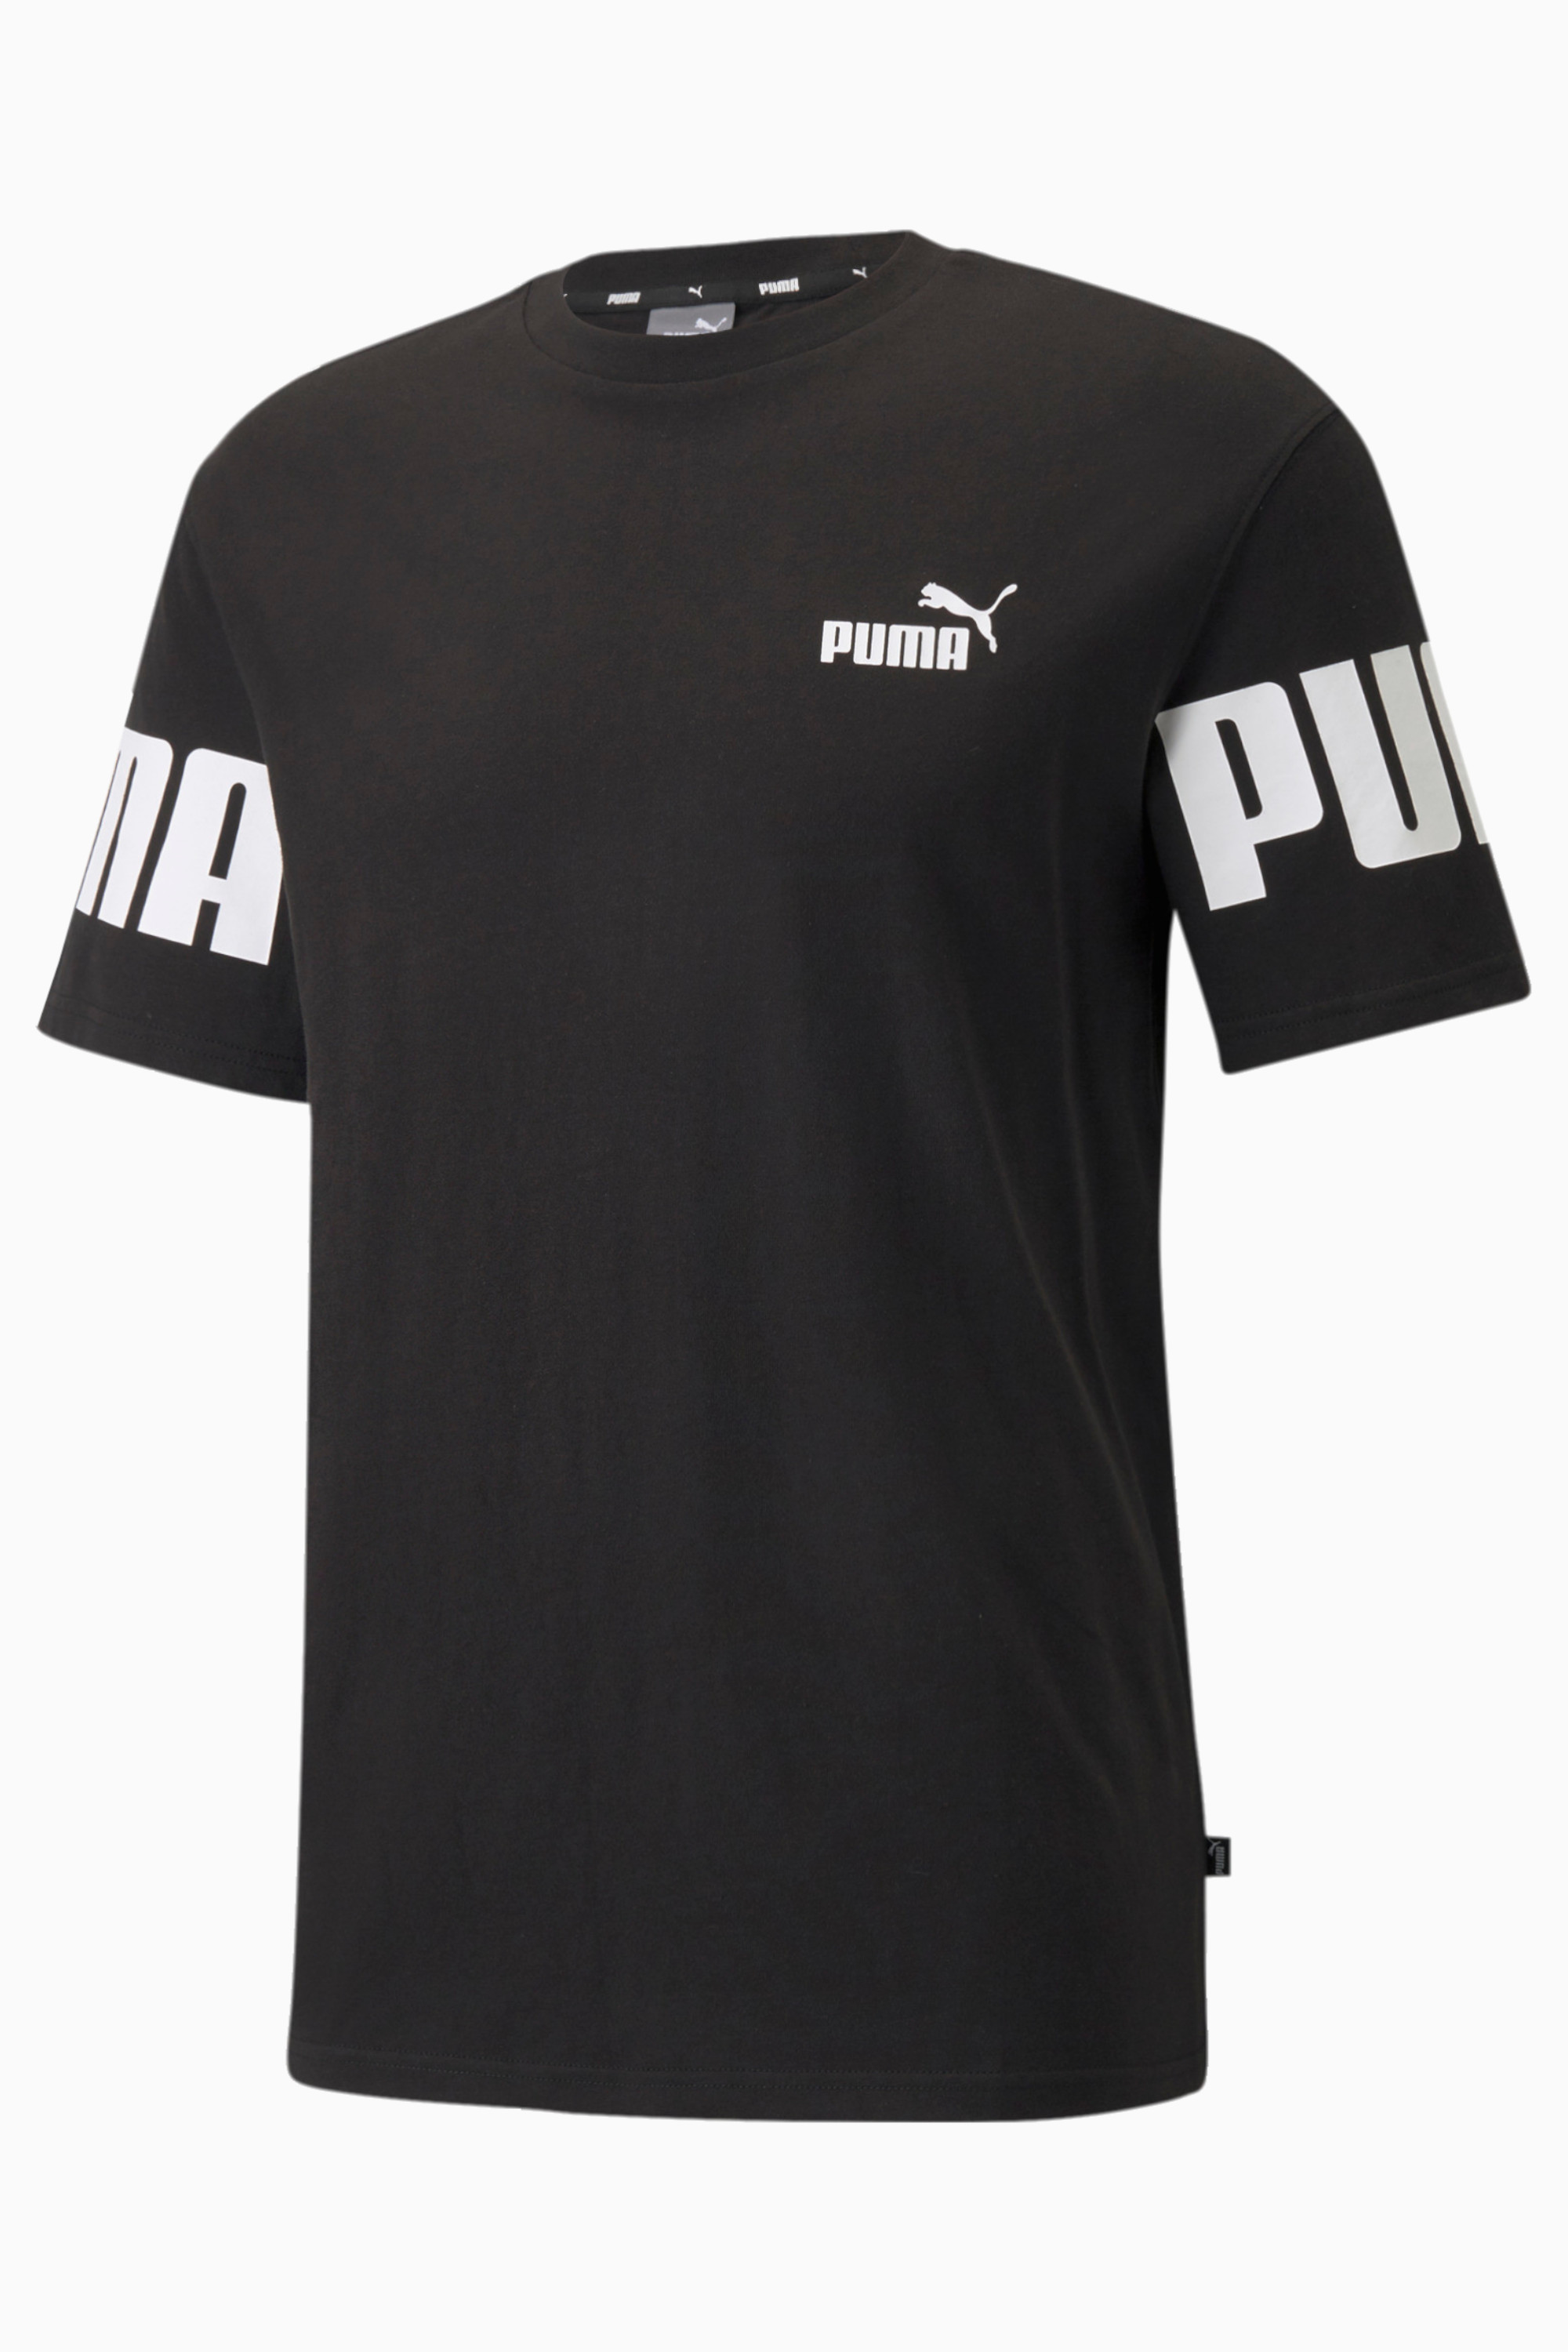 T-Shirt Puma Power Tee & boots R-GOL.com equipment | - Colorblock Football